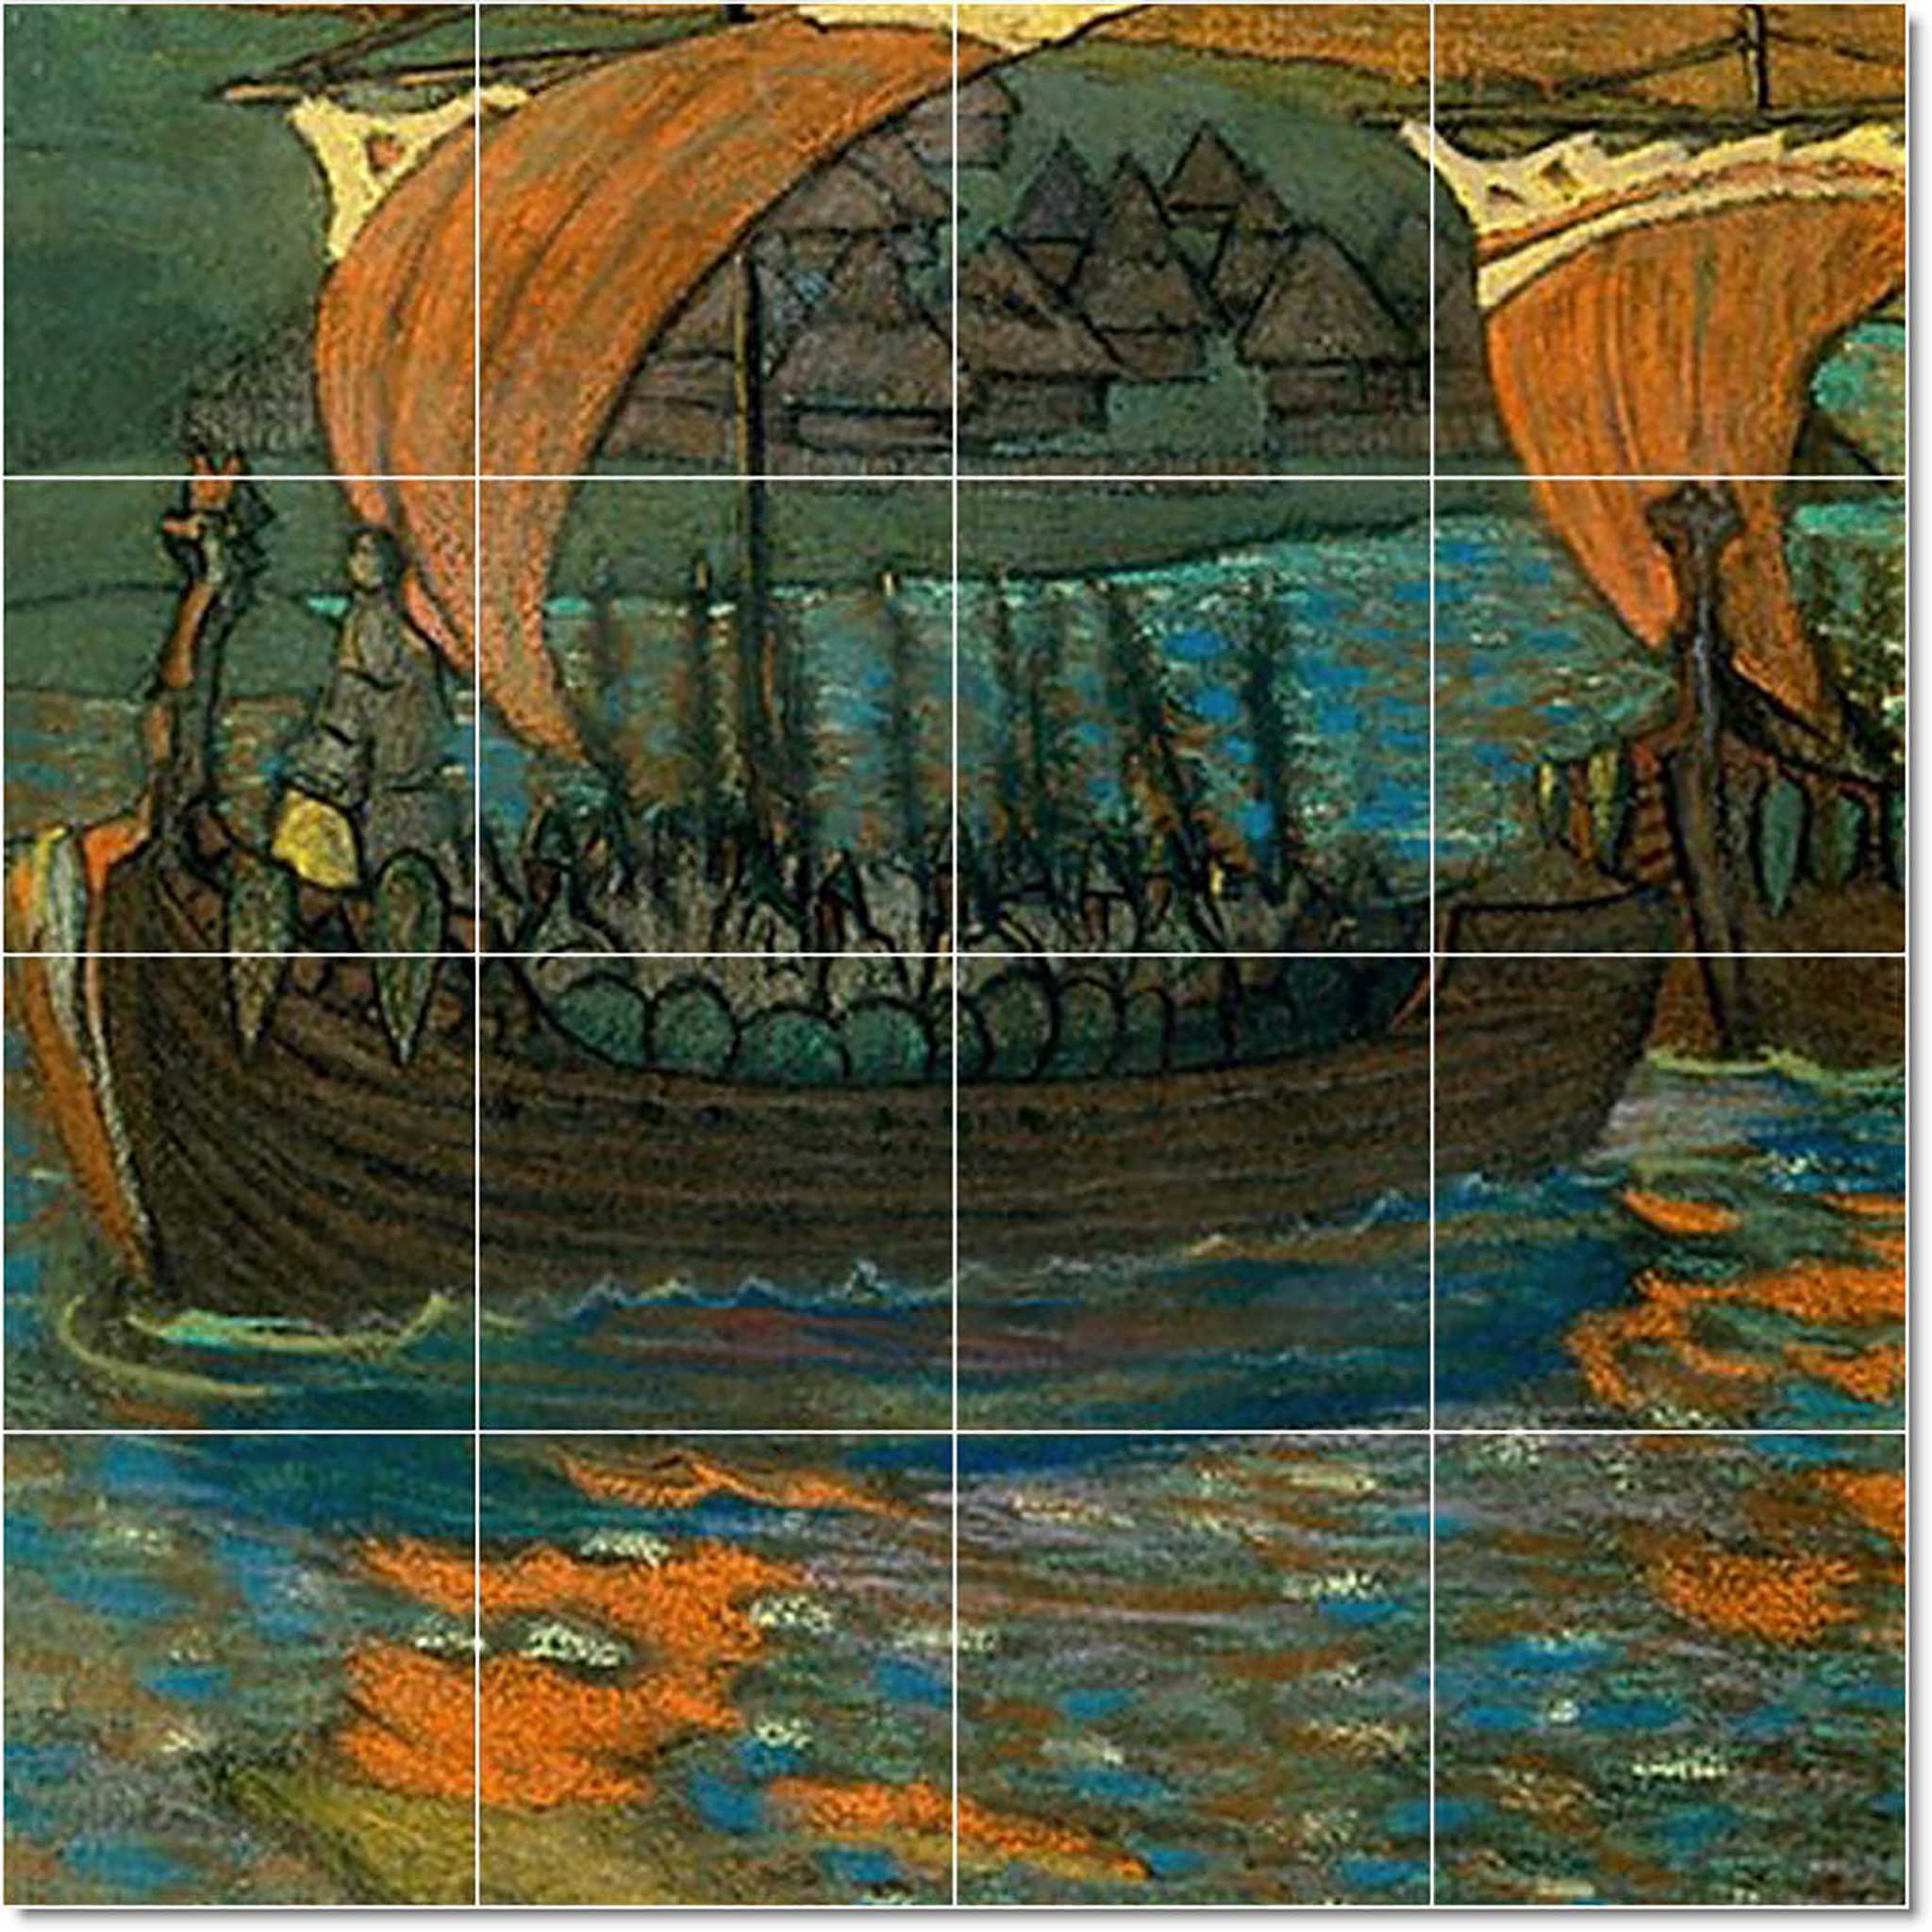 nilolai roerich boat ship painting ceramic tile mural p22990